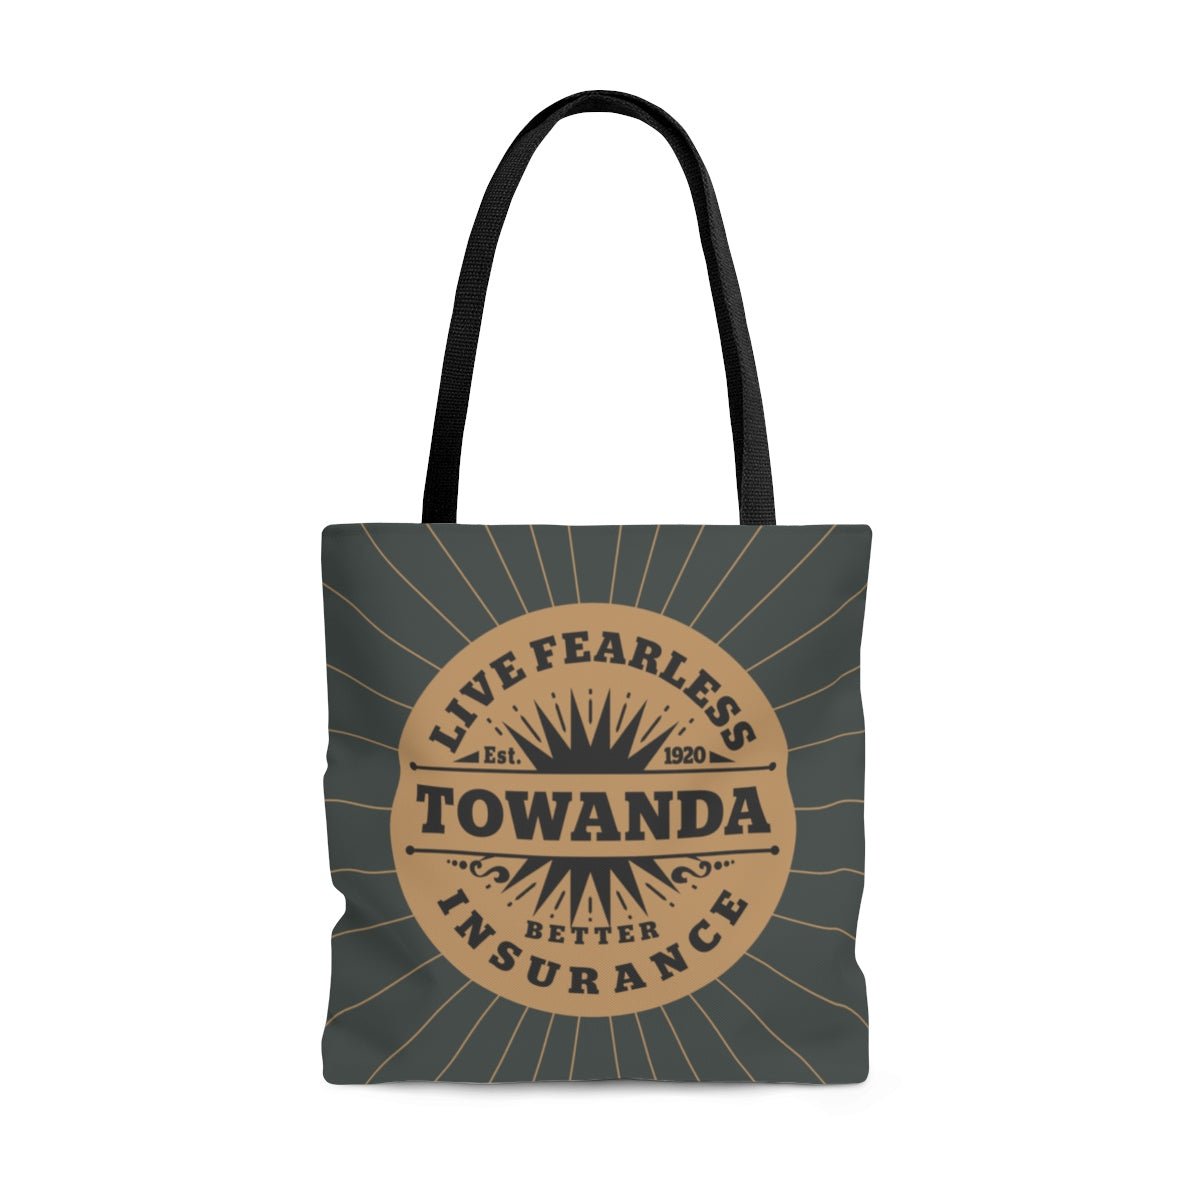 Live Fearless TOWANDA - Tote Bag